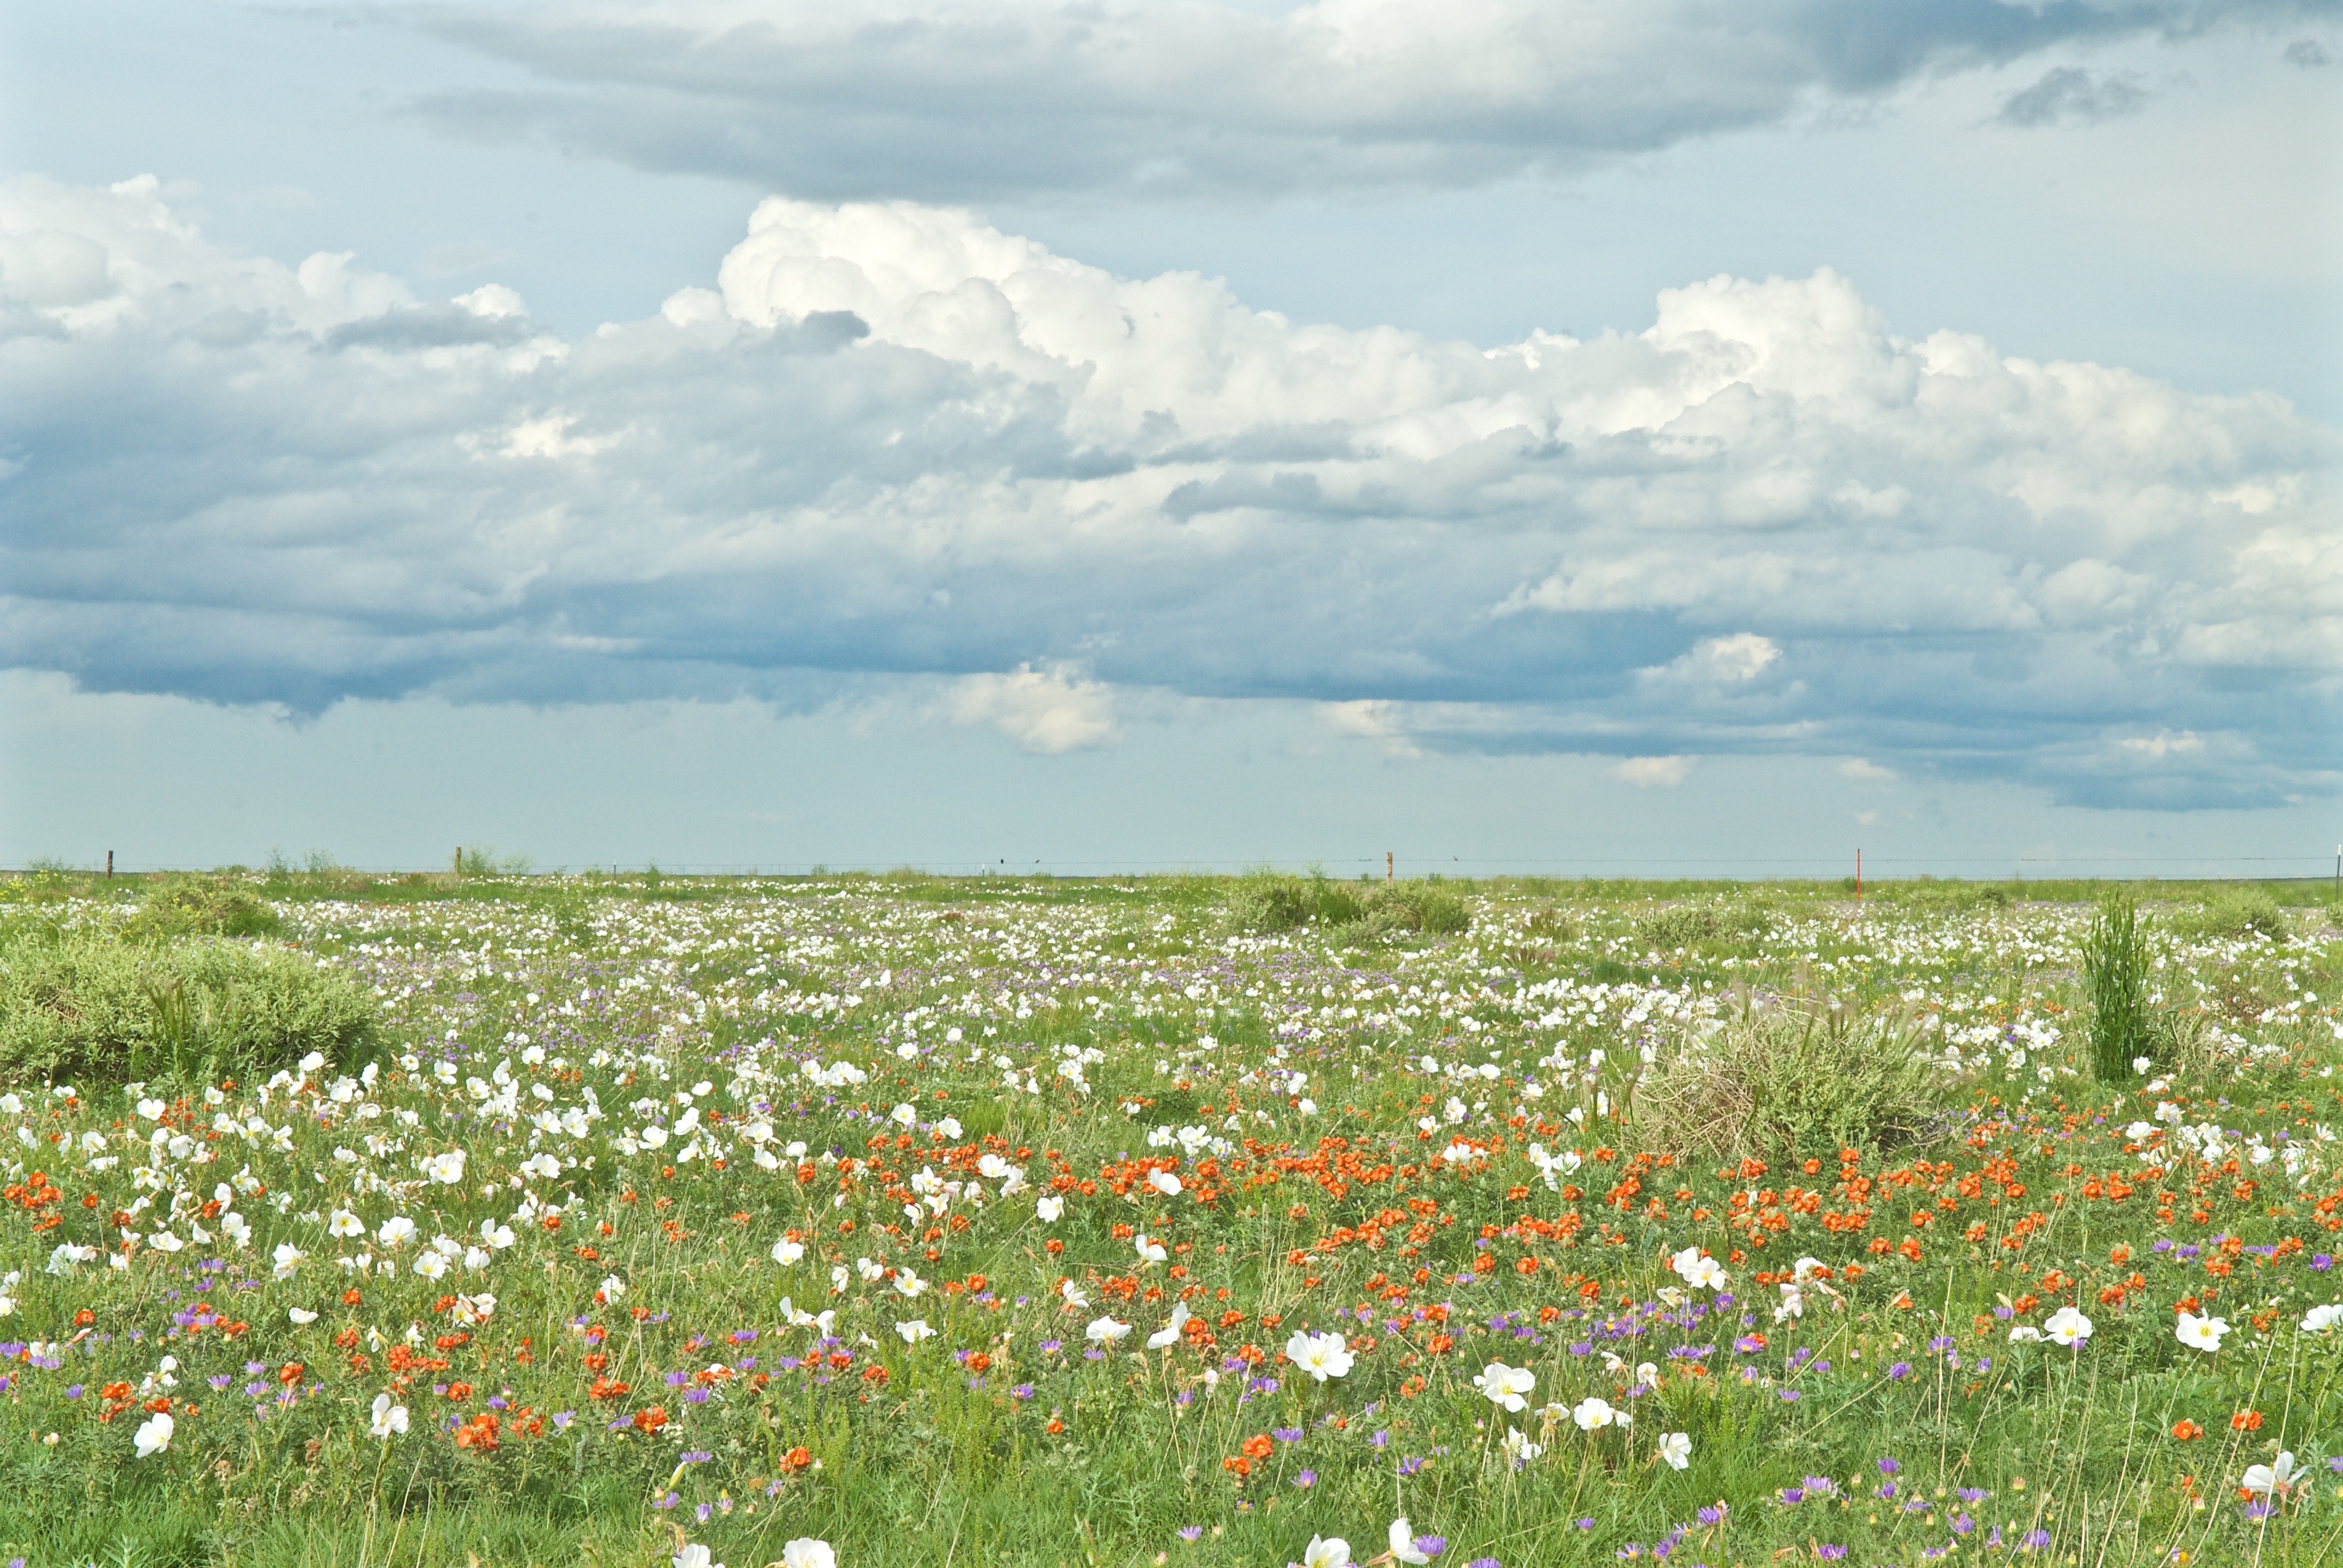 Pawnee Grasslands (Tansyaster, Primrose, Scarlet Mallow)